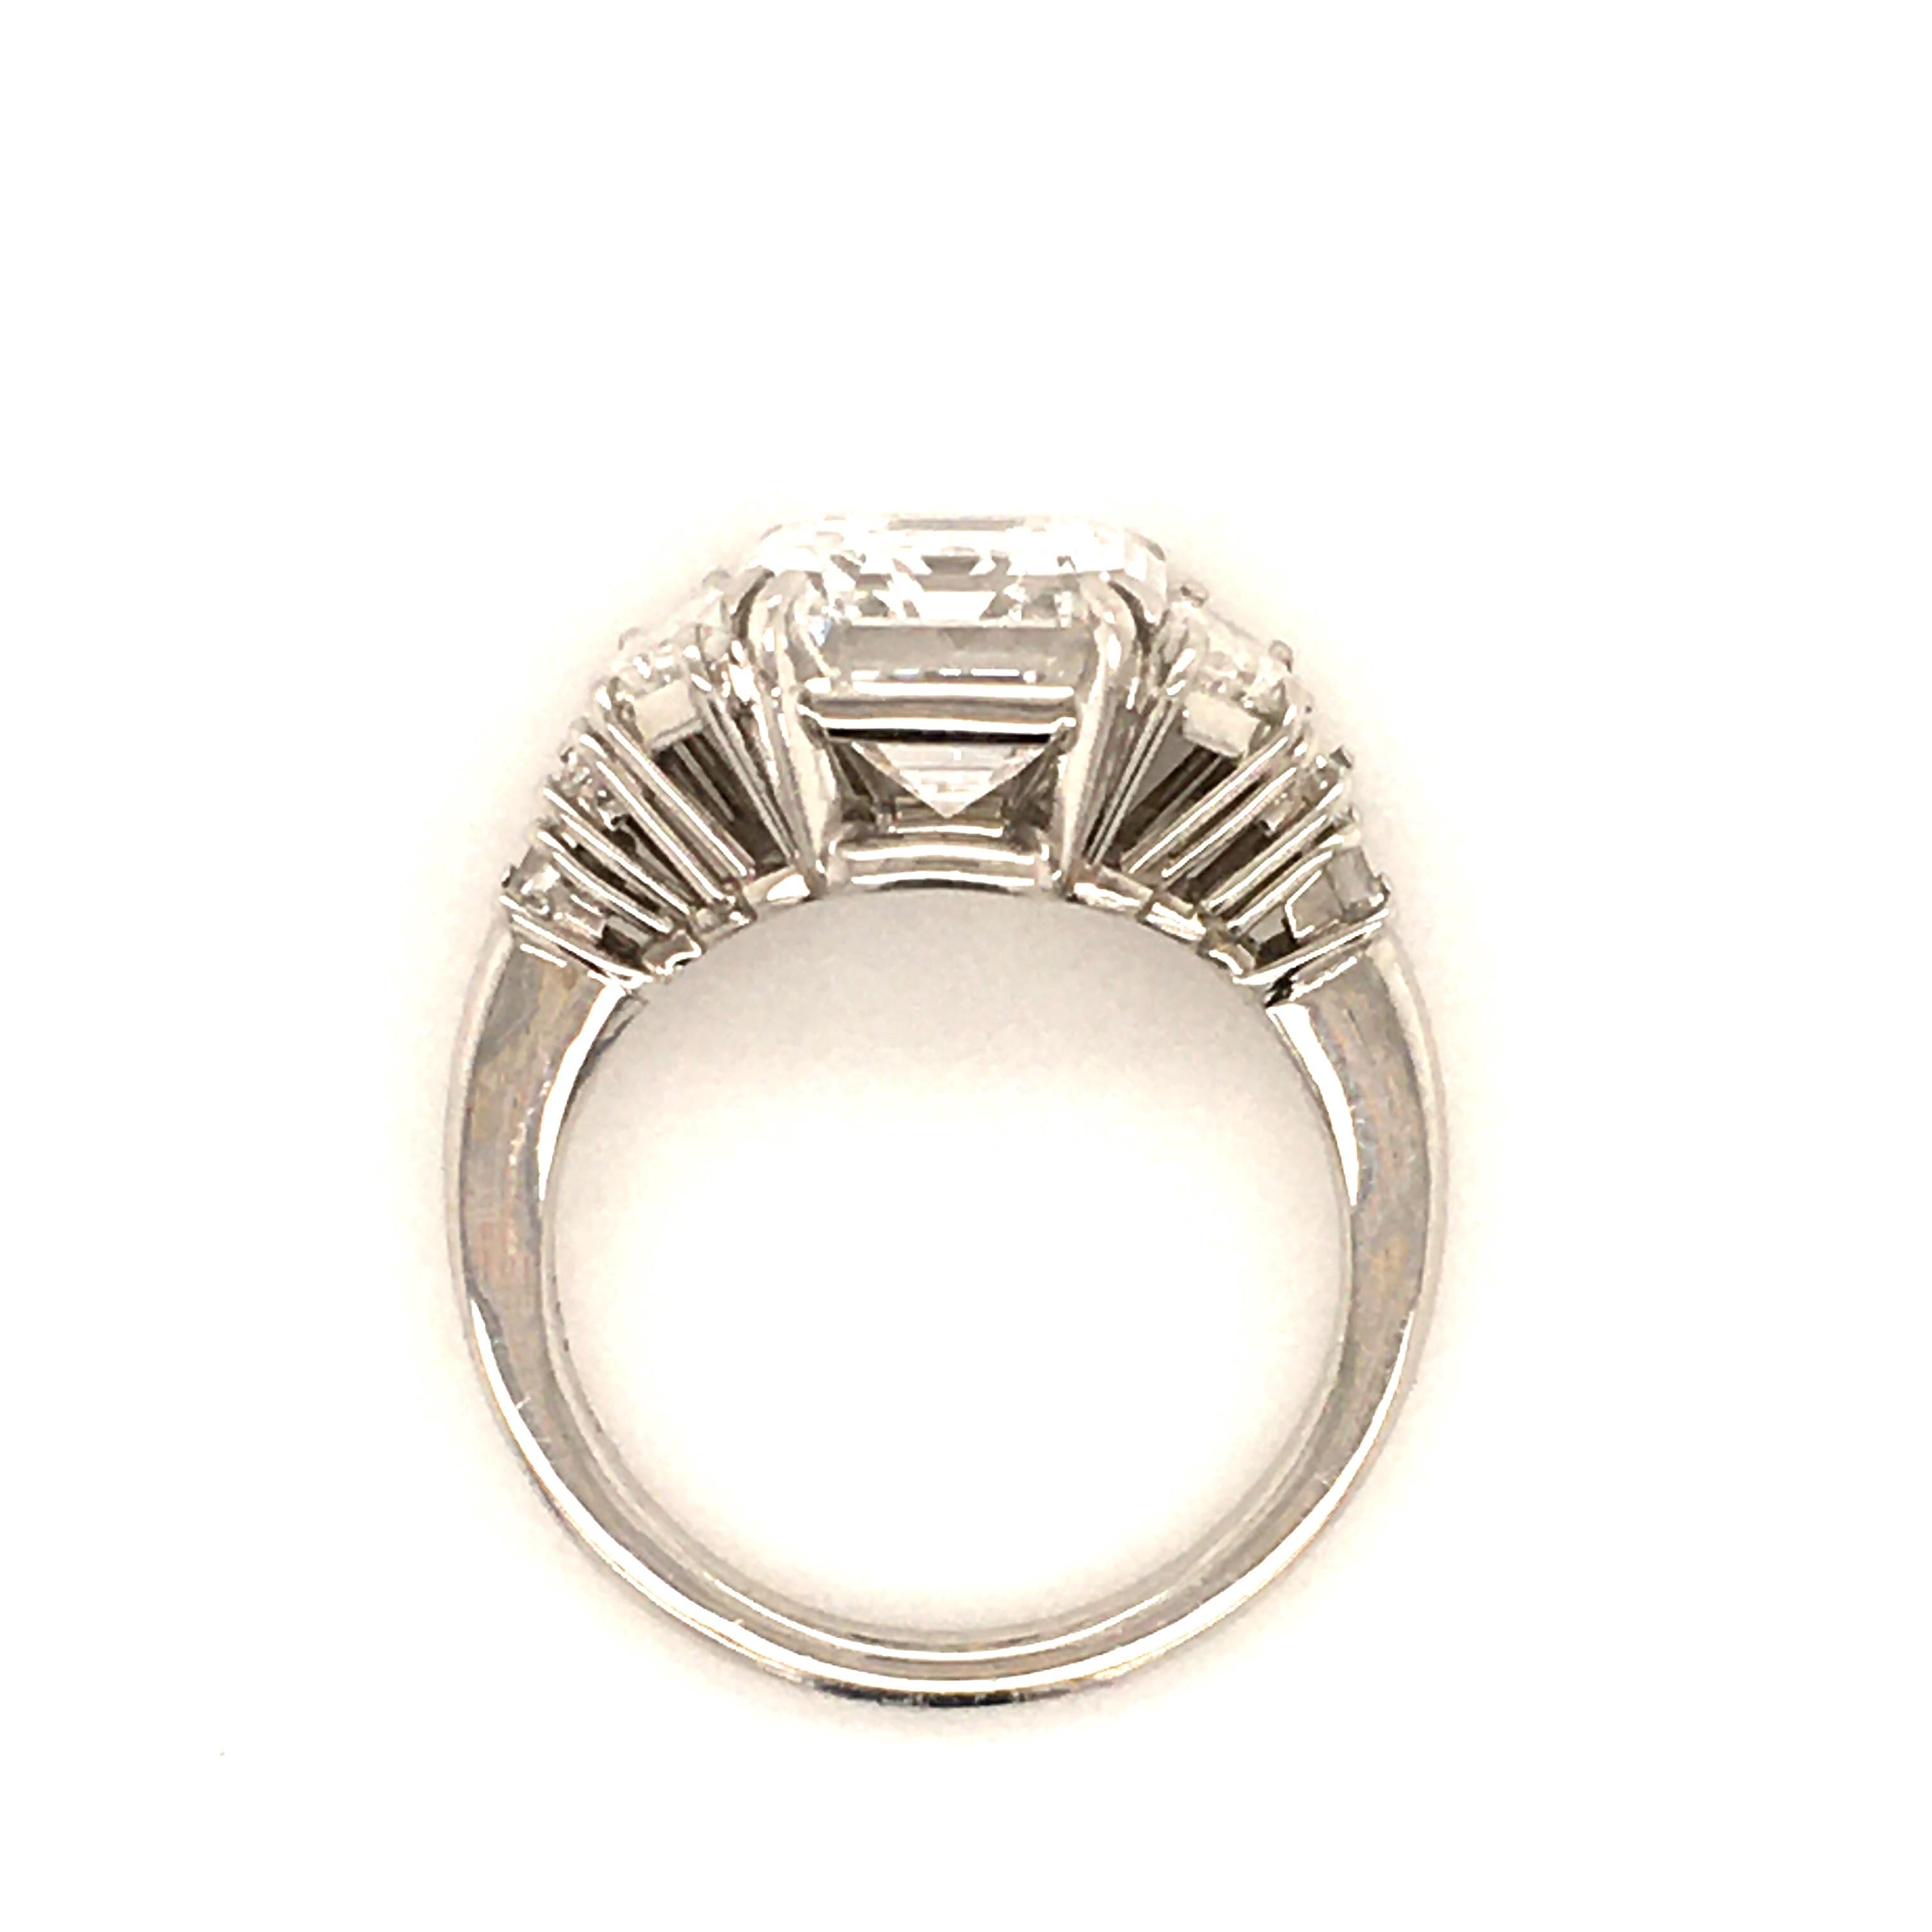 Harry Winston GIA Certified 4.63 Carat Emerald Cut Diamond Ring in Platinum 950 For Sale 3